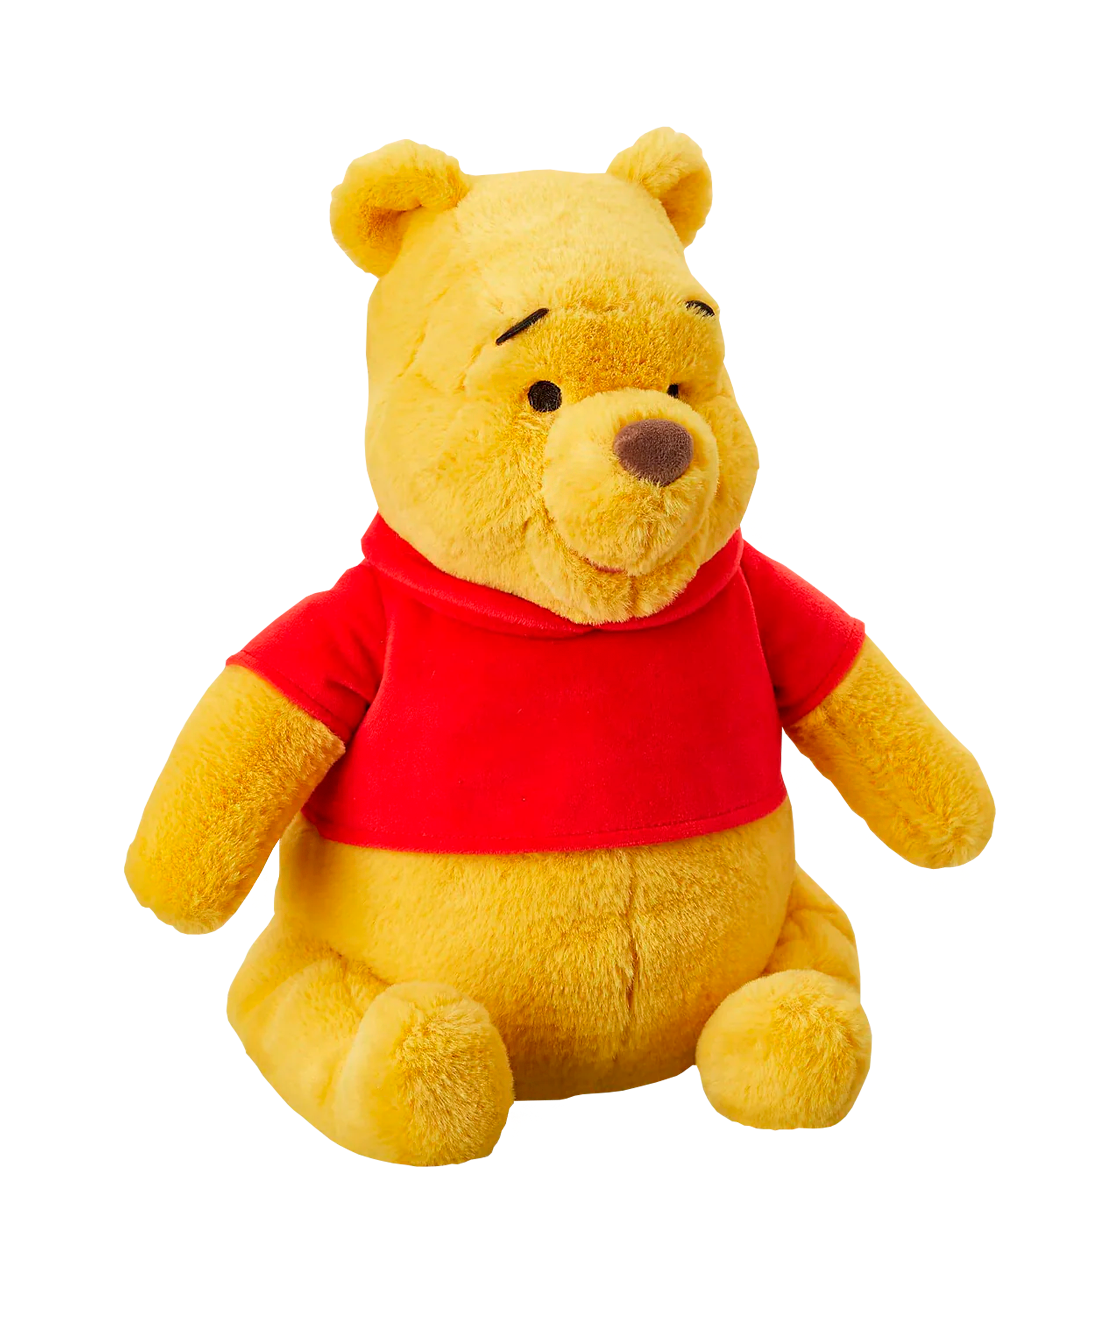 Bear plush toy